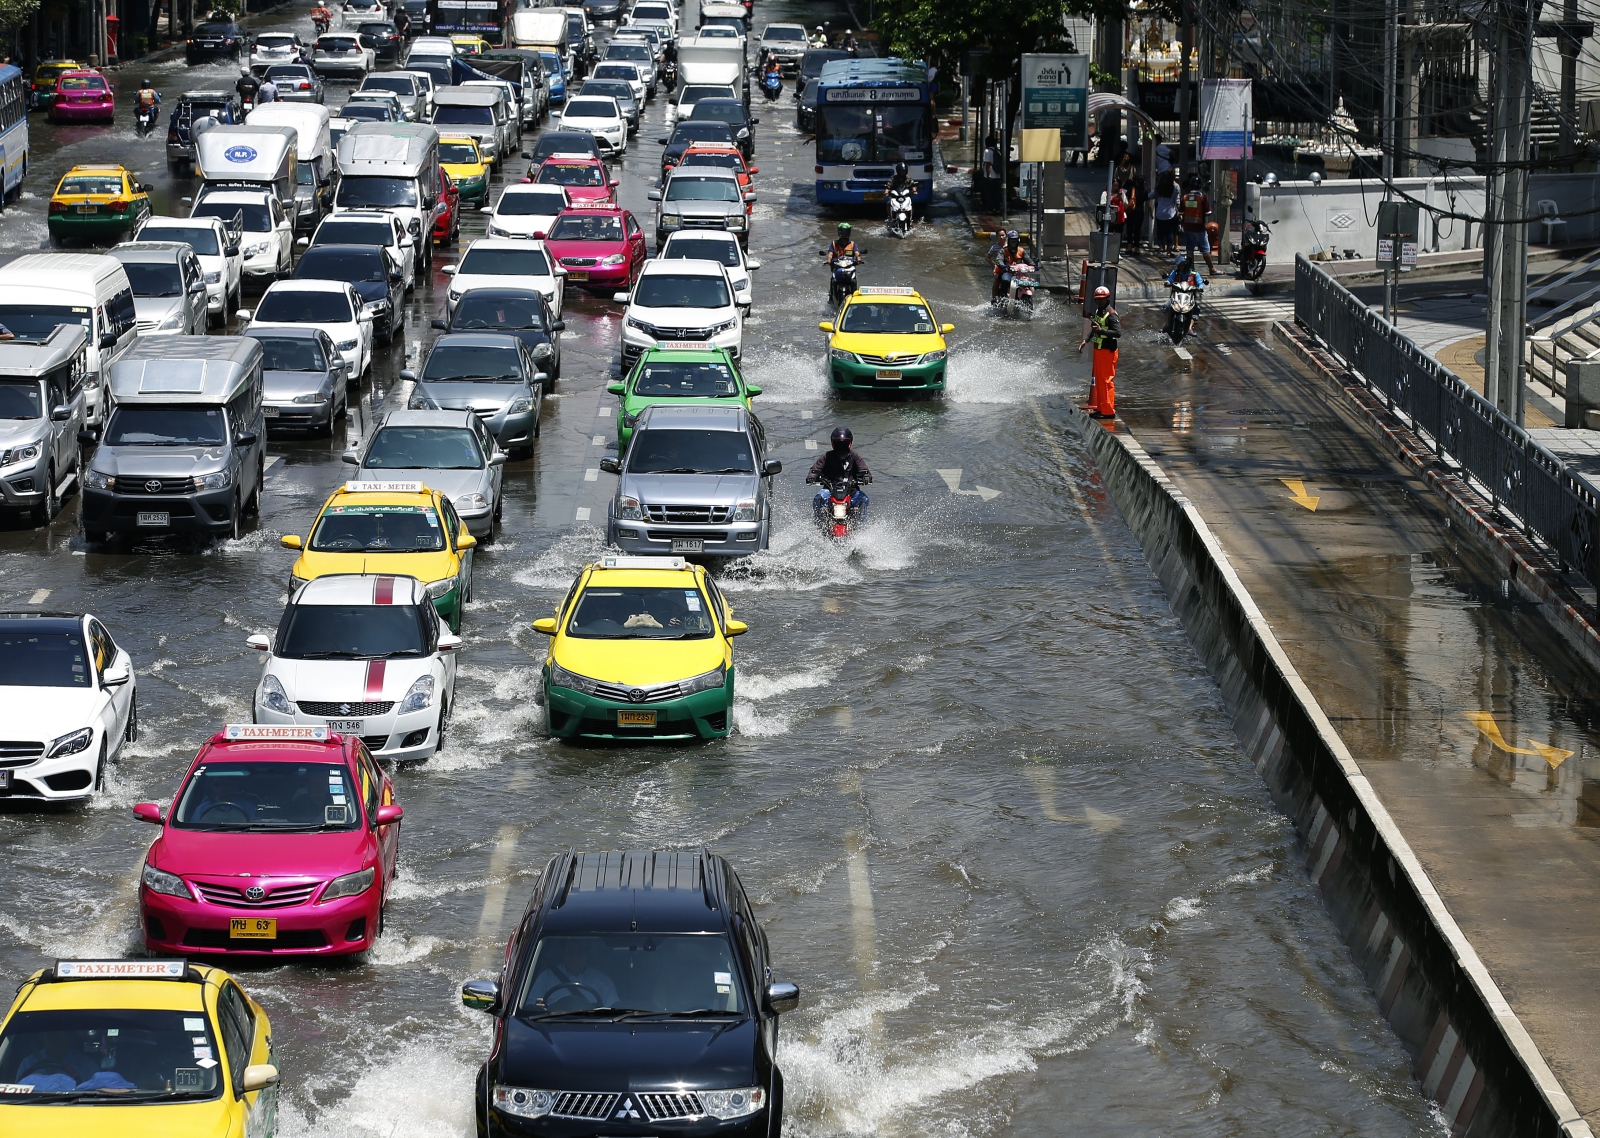 Powodzie w Tajlandii.
Fot. PAP/EPA/NARONG SANGNAK